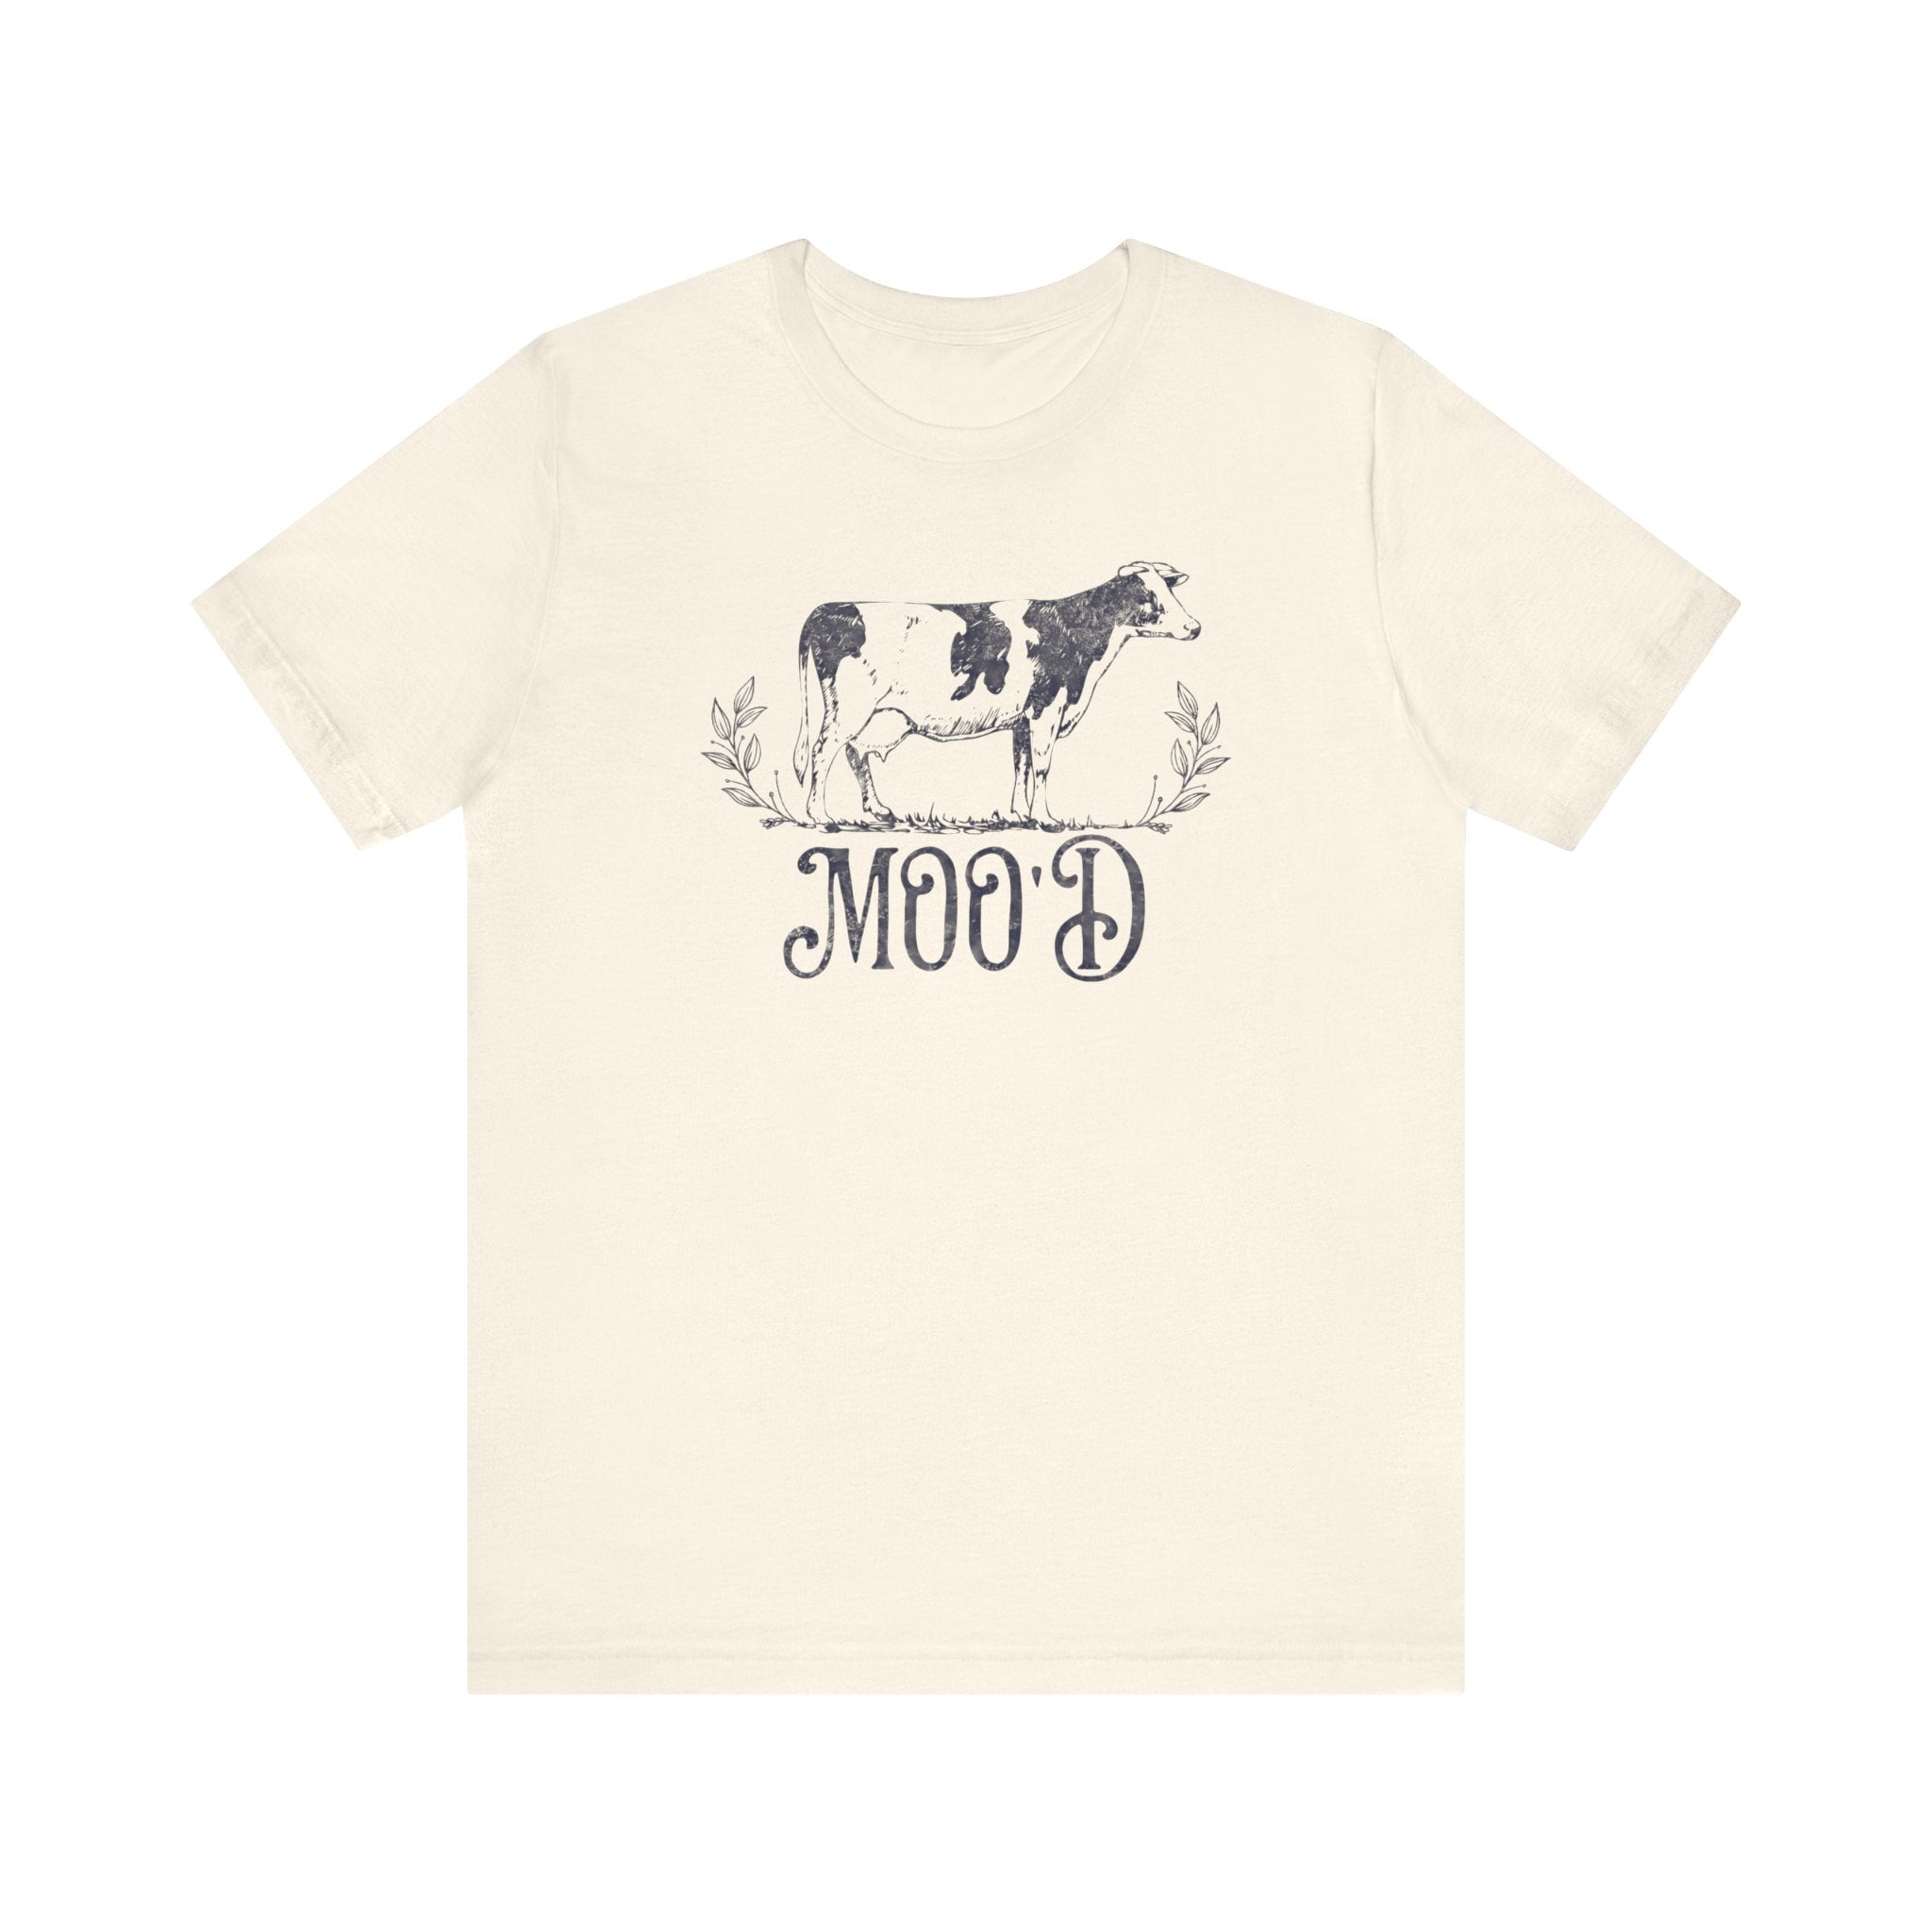 Moo’d Cow T-Shirt